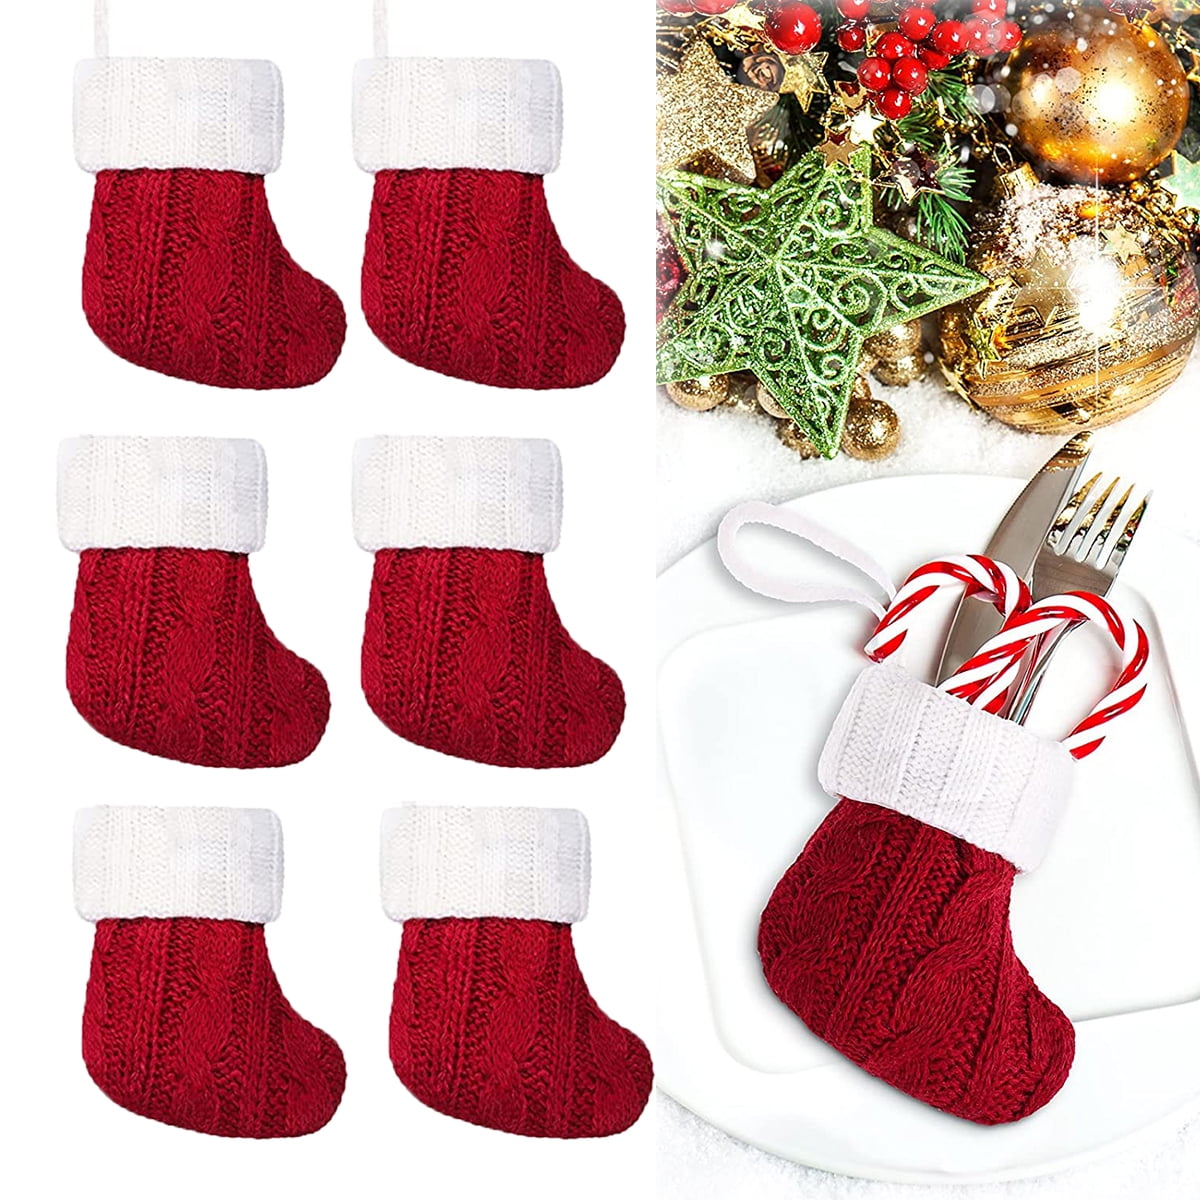 6PCS Christmas Mini Stockings Knitted Xmas Classic Stocking Small ...